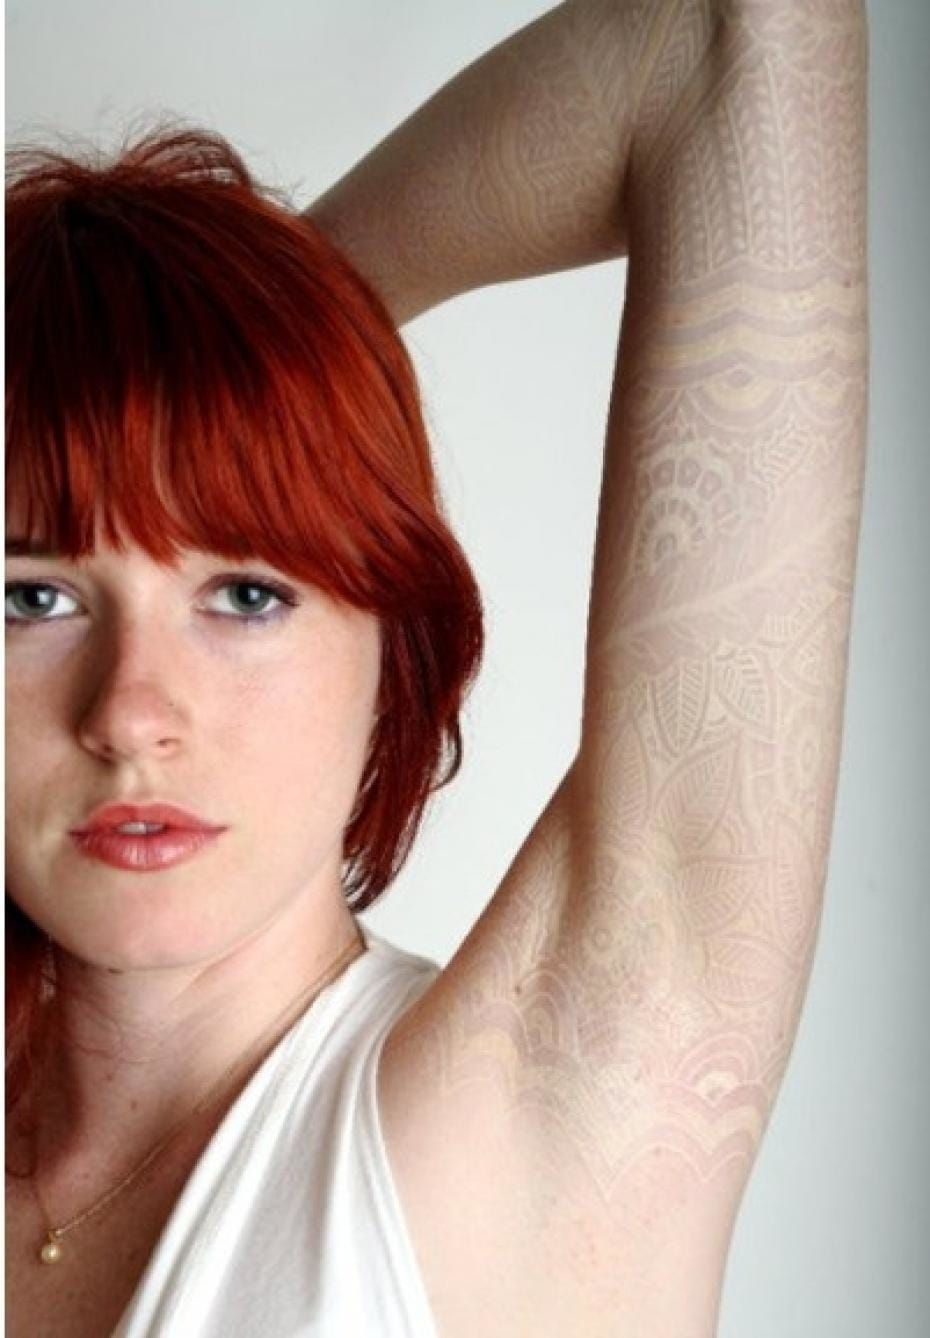 White Ink Sleeve Tattoos Ideas  Tattoos Spot